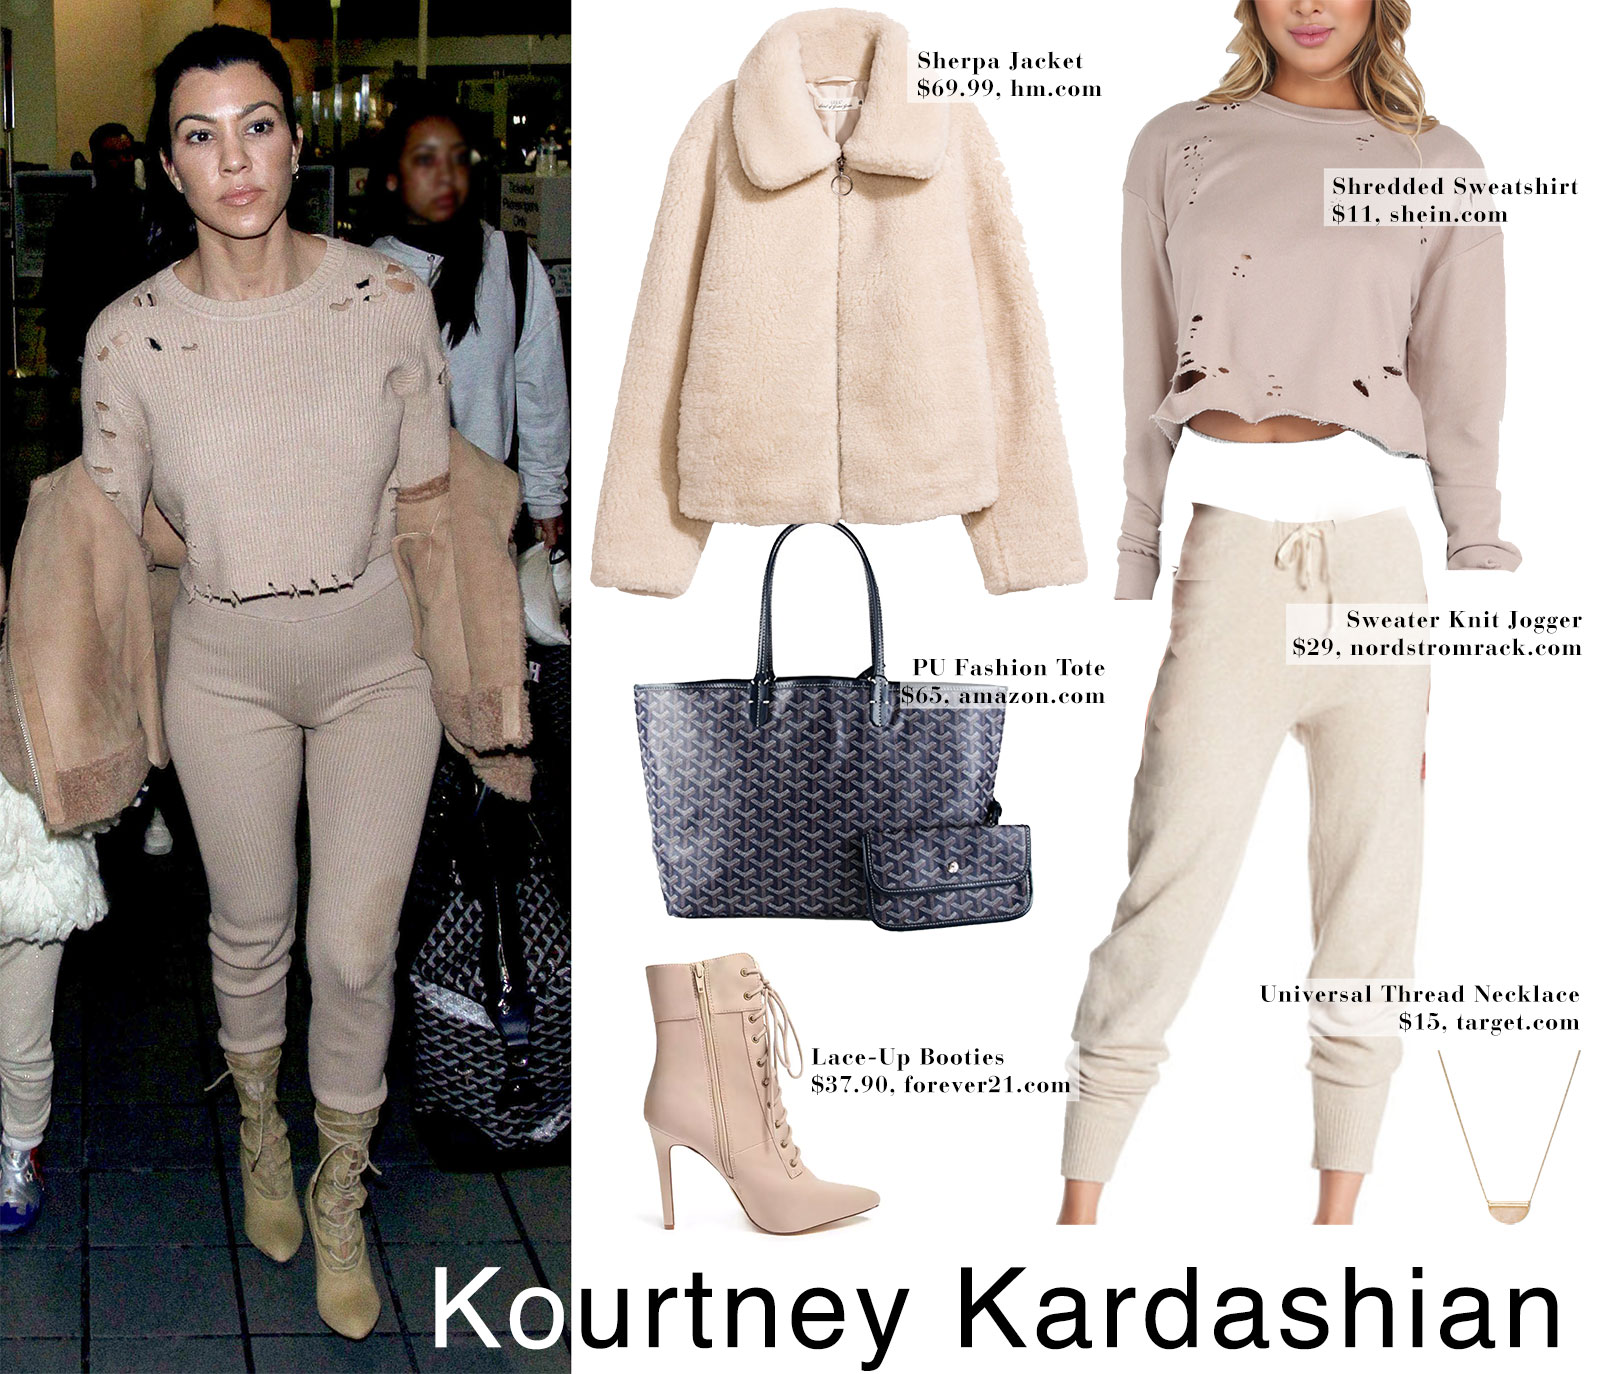 Kourtney Kardashian's beige fur jacket, shredded sweater, knit joggers and lace-up booties.